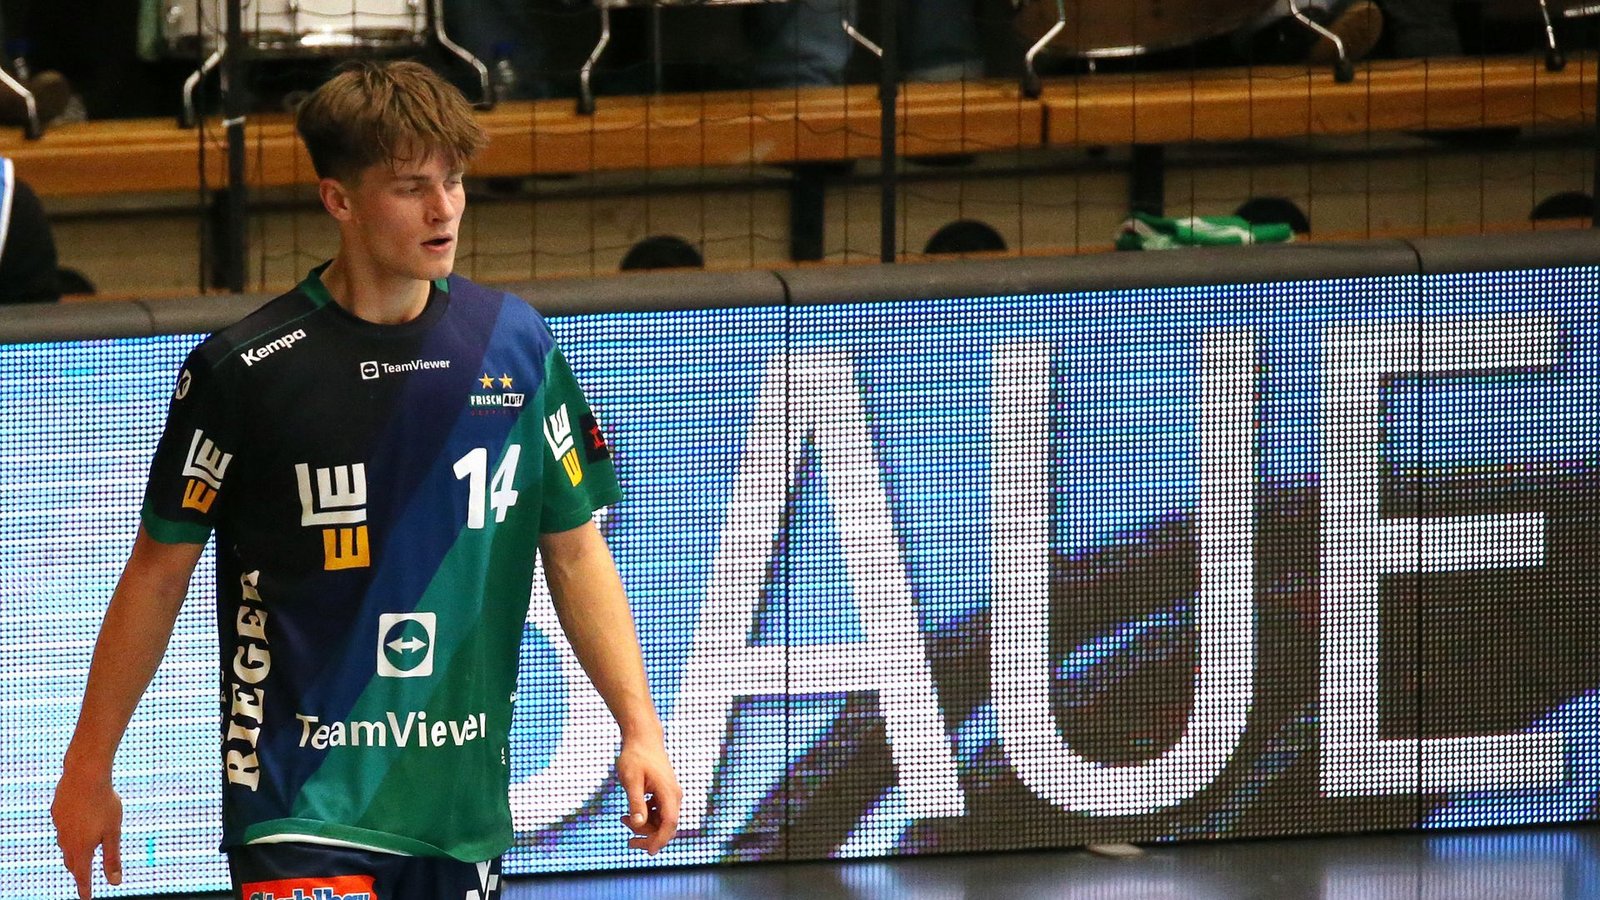 Der A-Jugendliche Valentin Abt erzielte drei Treffer.Foto: Pressefoto Baumann/Alexander Keppler